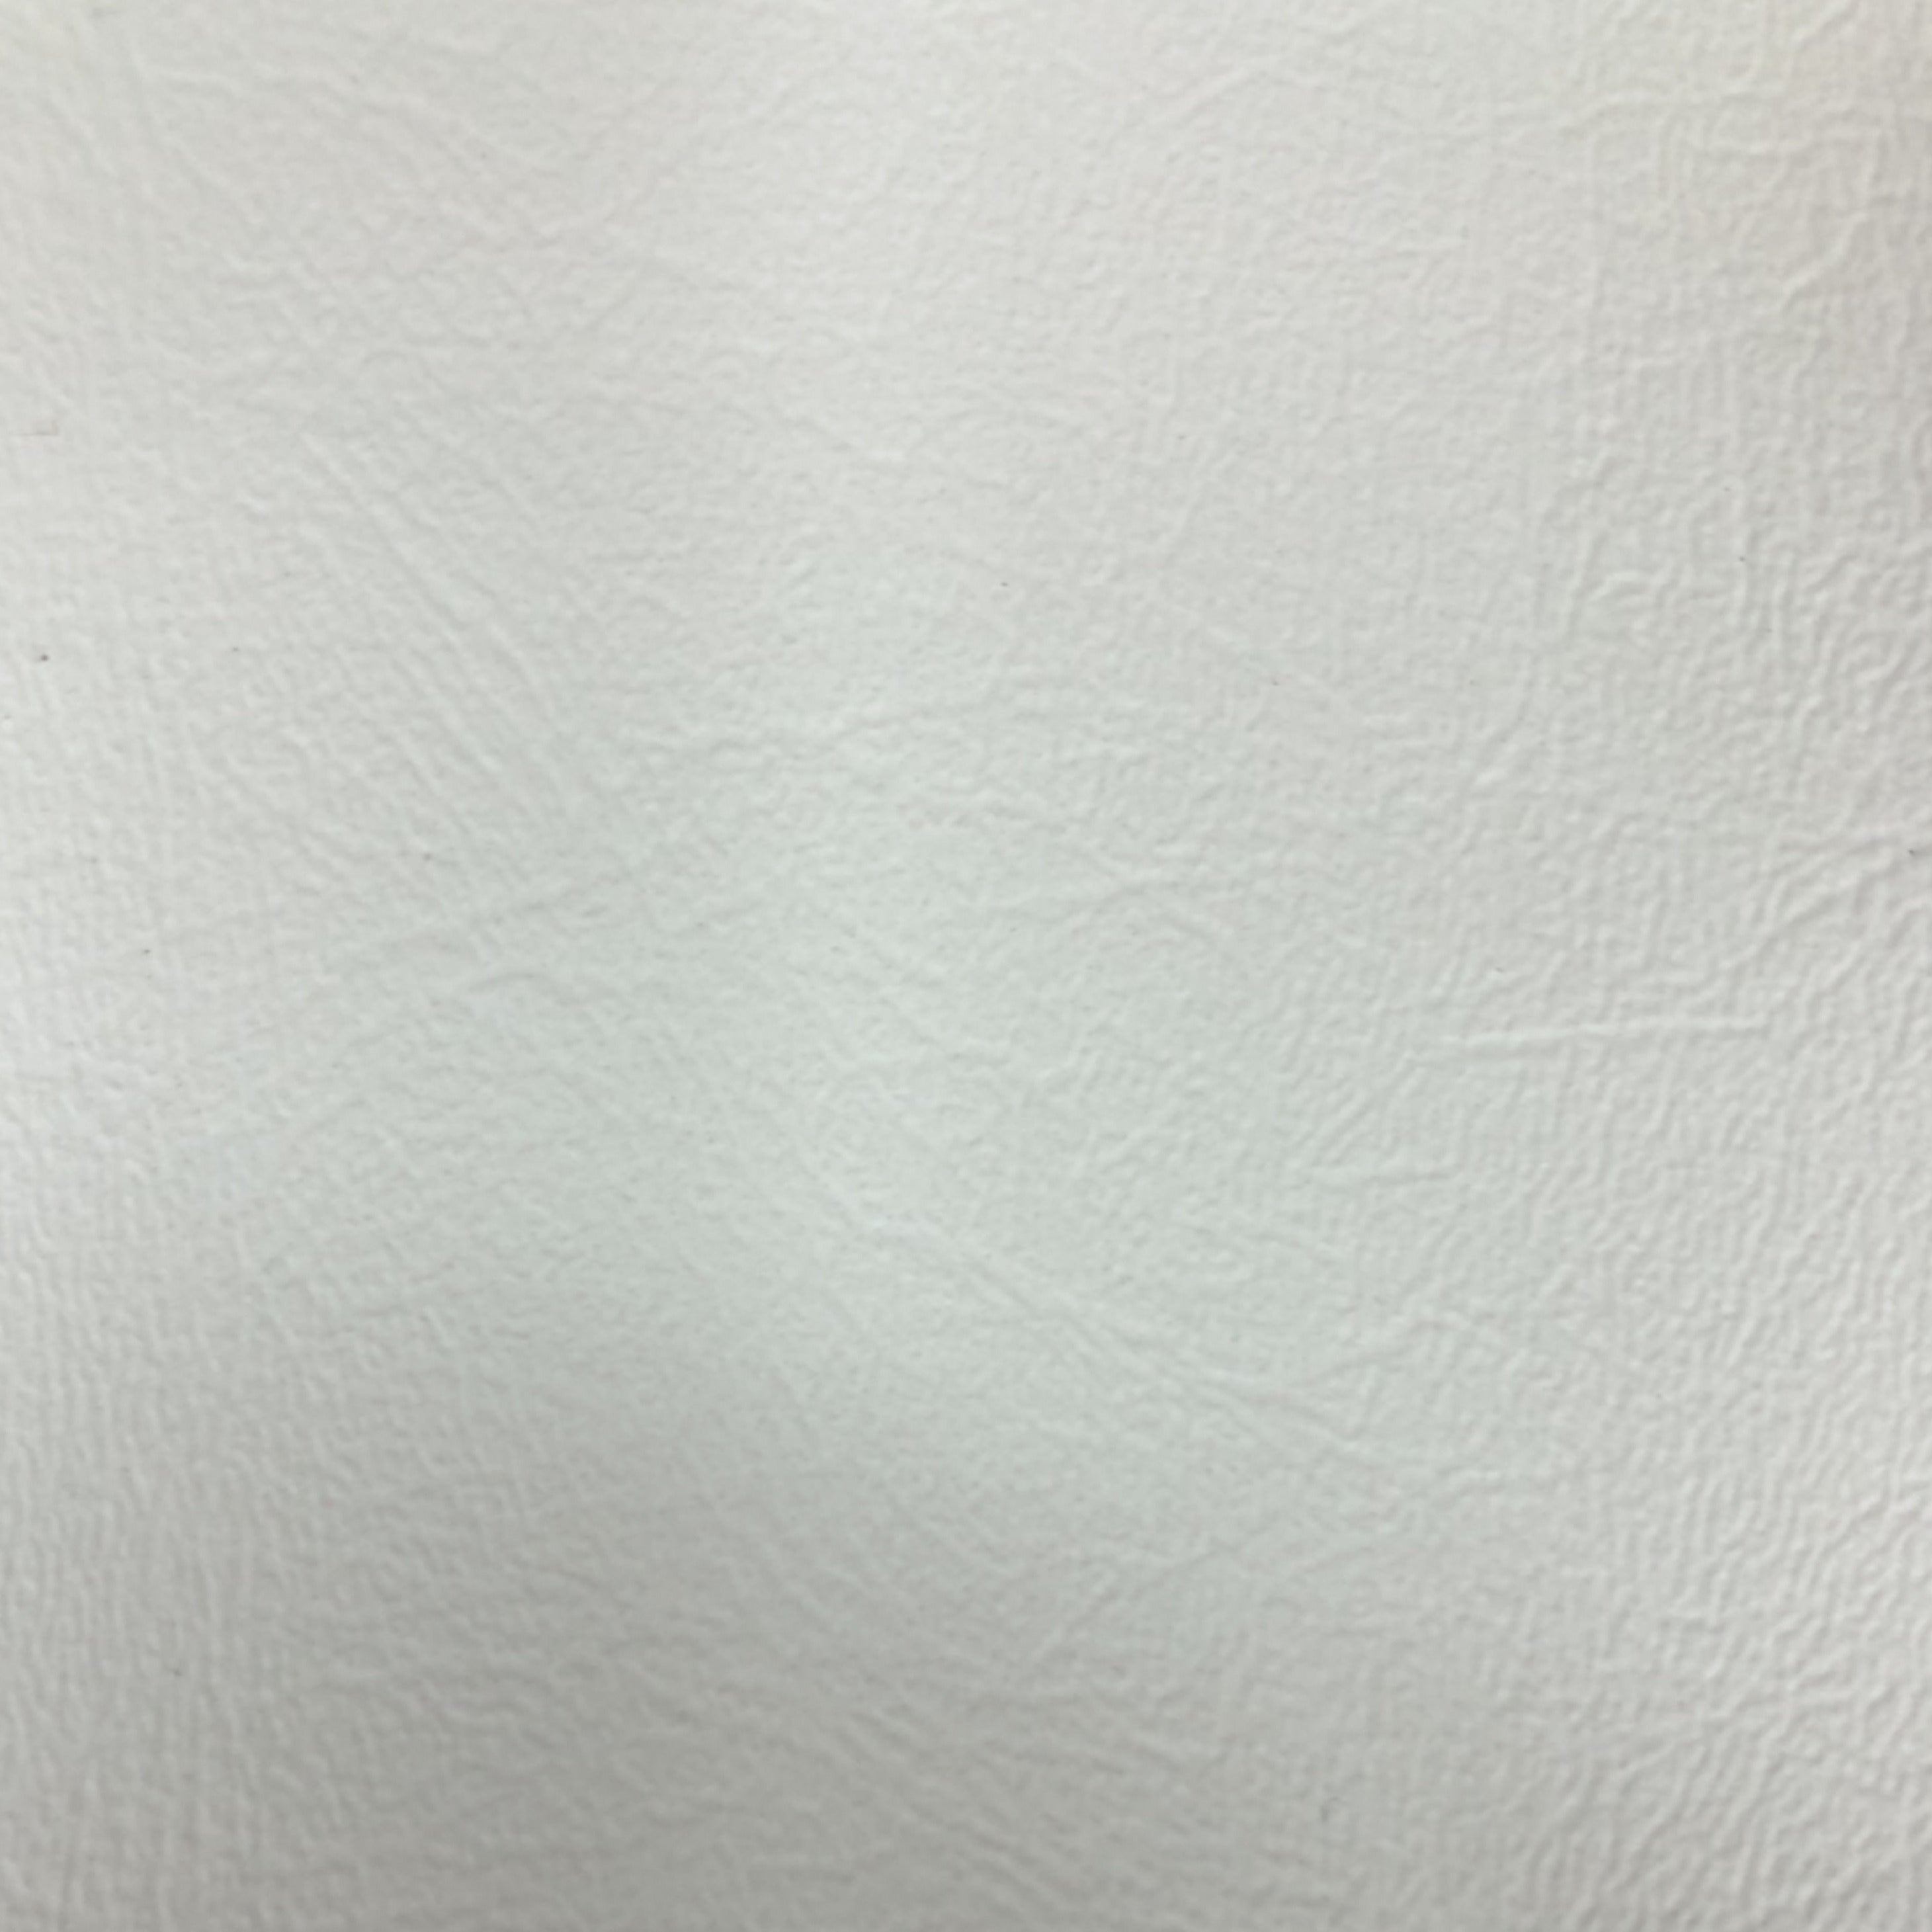 White Cotton-Backed Reflective Fabric - Tech Fabrics - Other